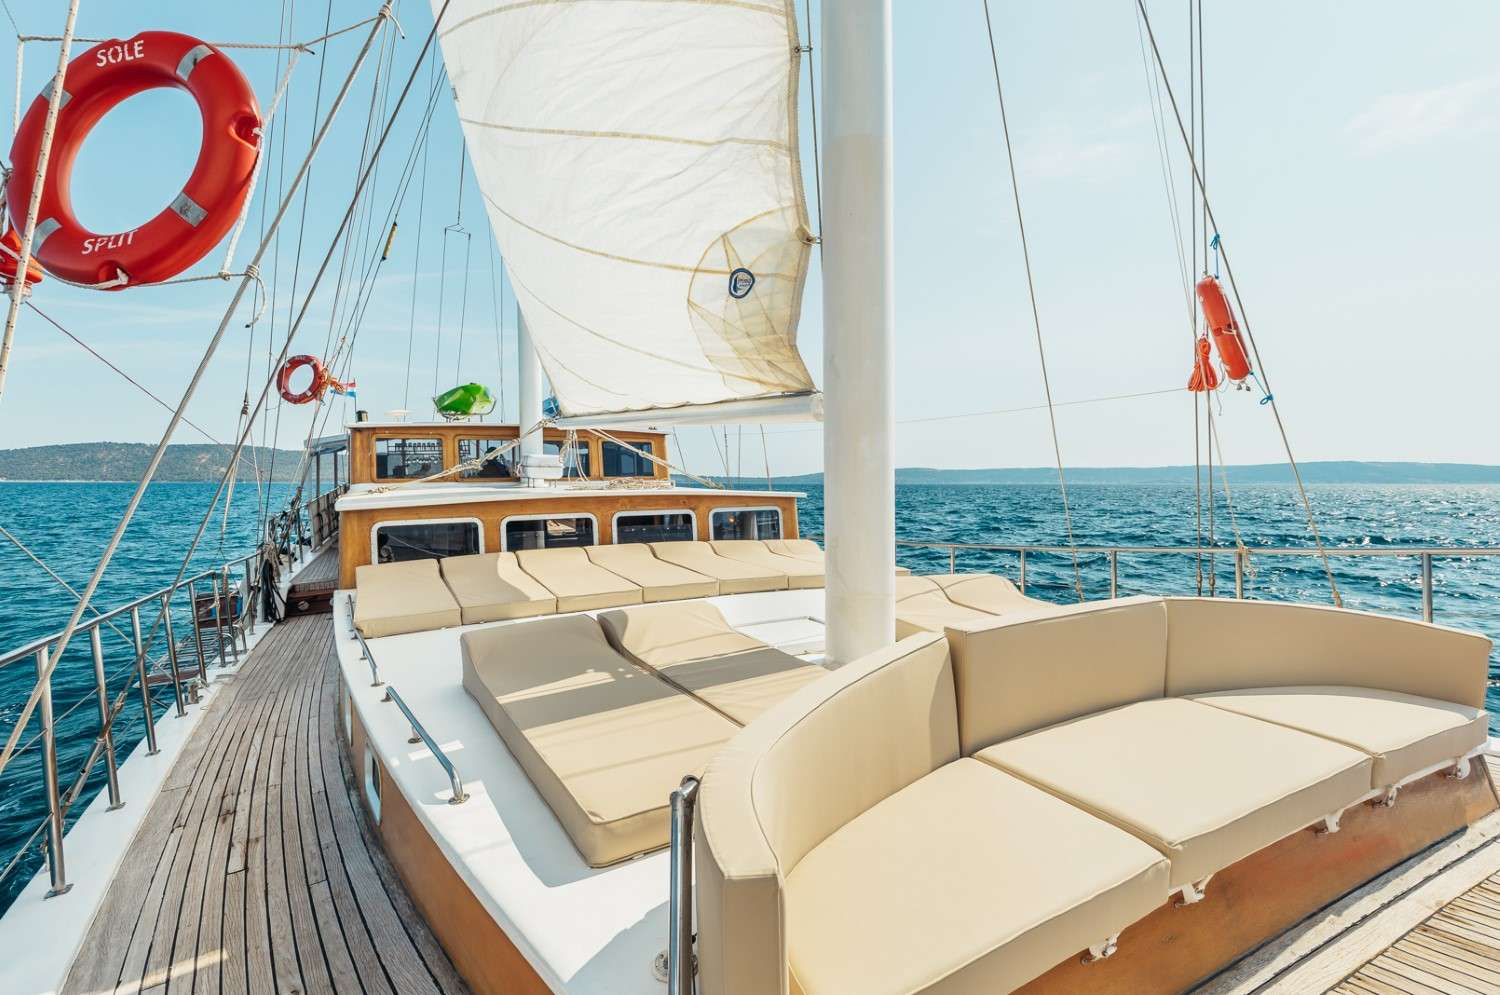 Sole  - Yacht Charter Vinišće & Boat hire in Croatia 5